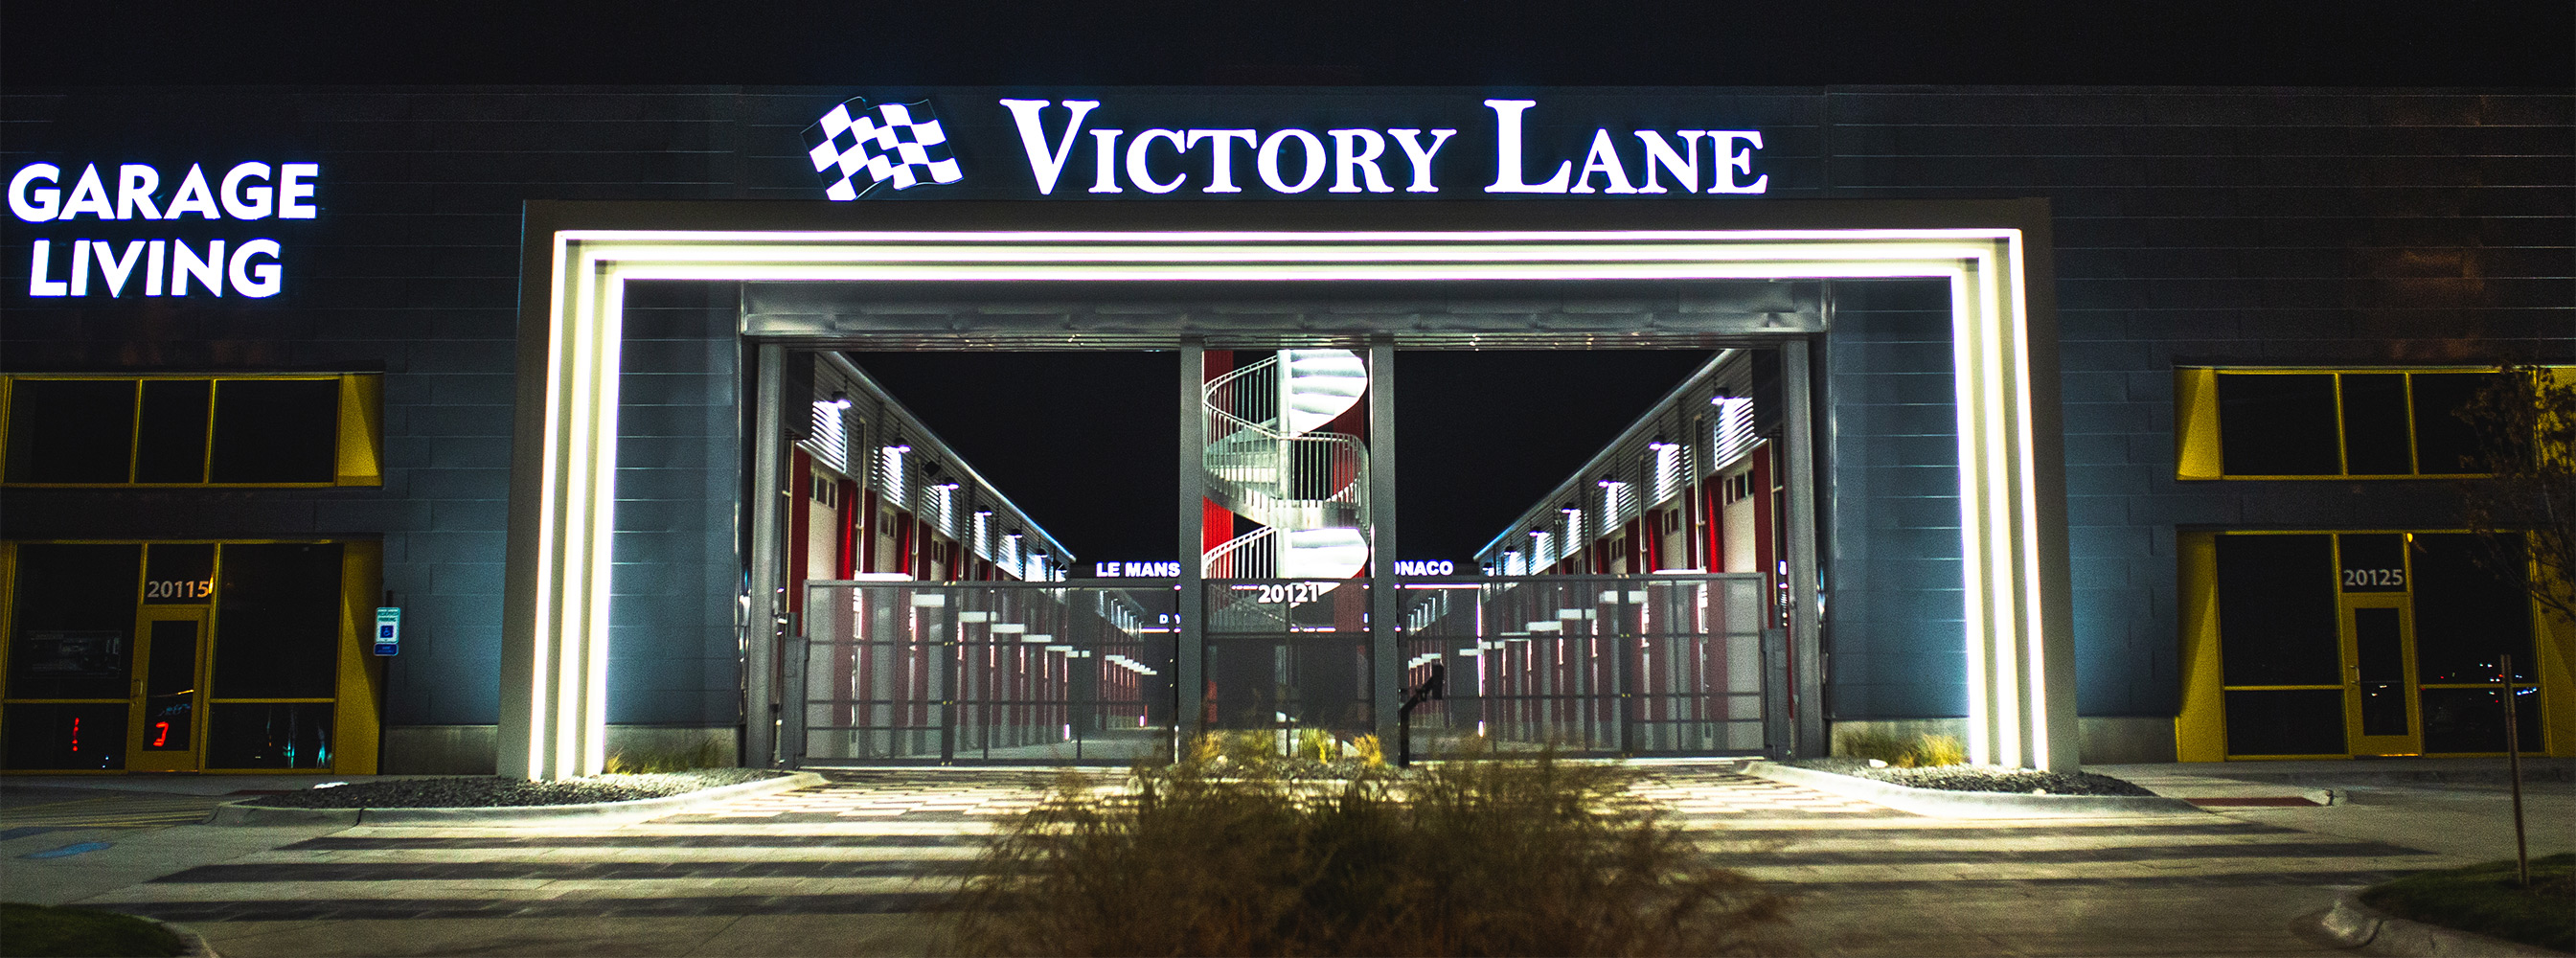 victory-lane_1000px_1